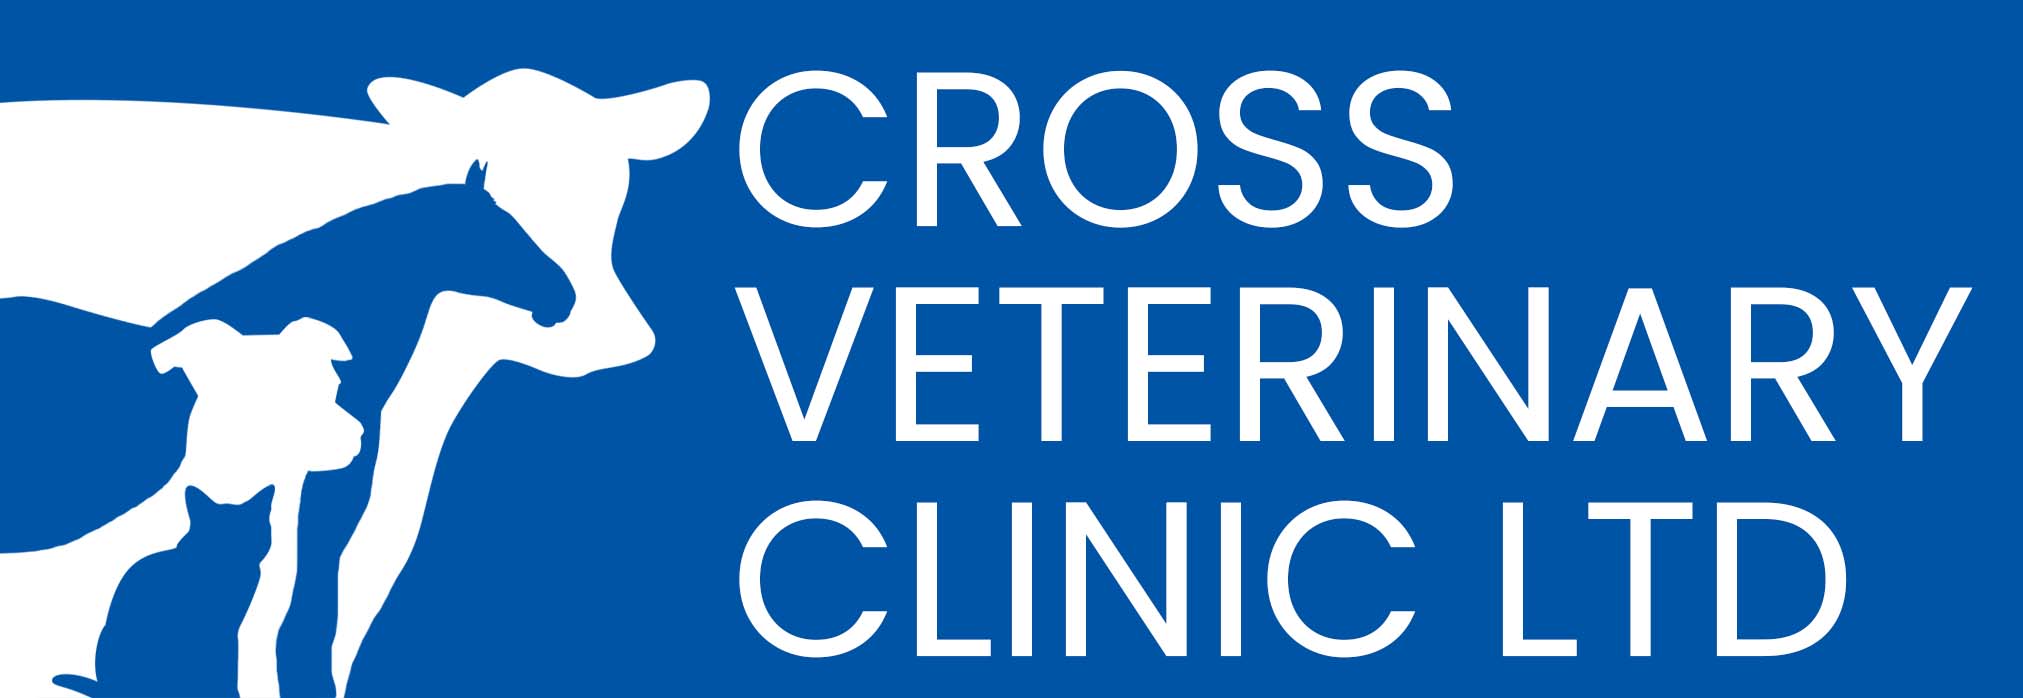 Cross Veterinary Clinic Ltd blue background